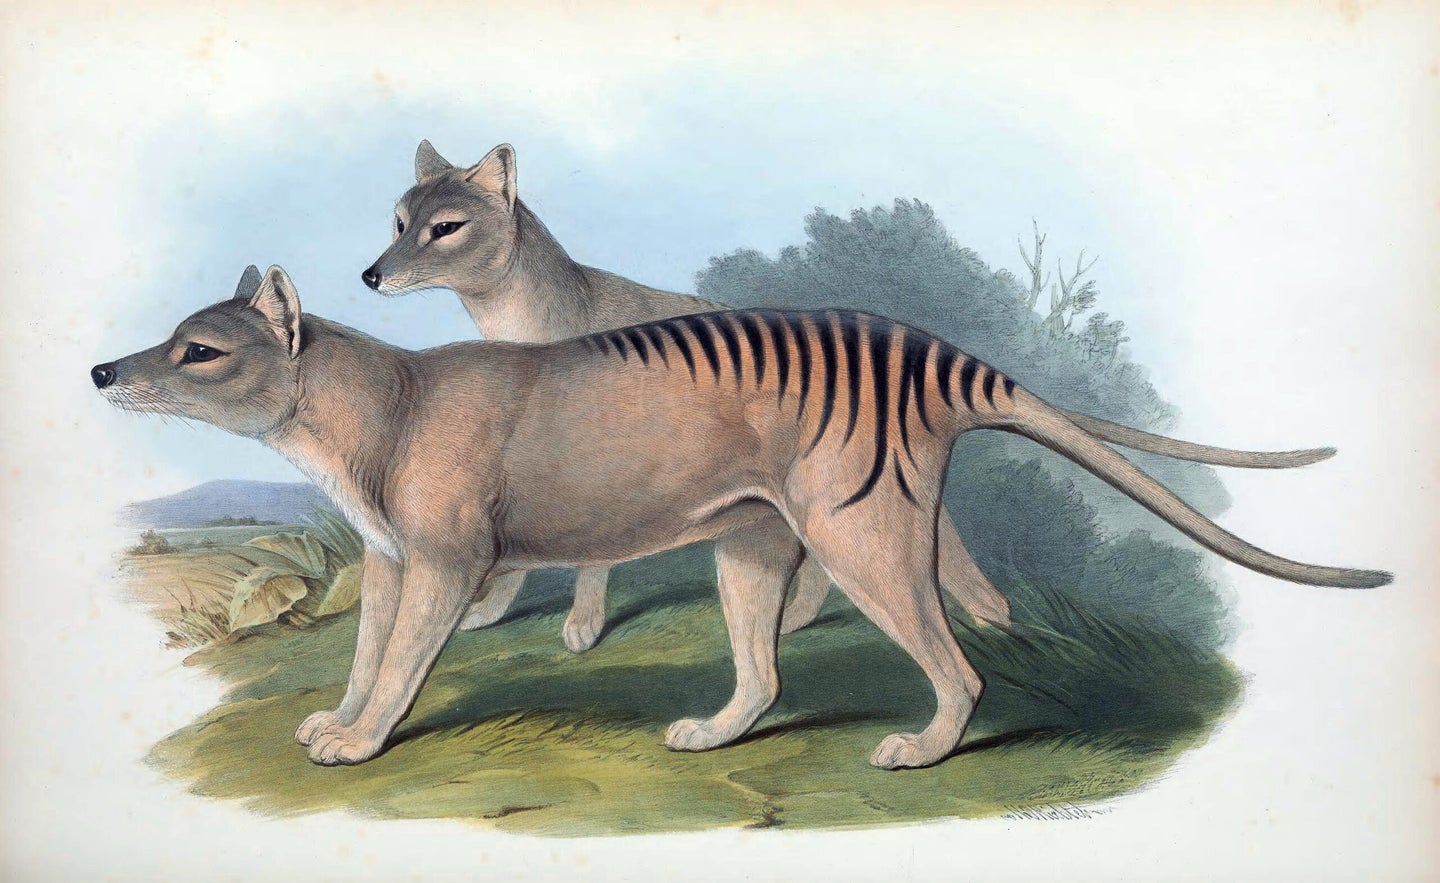 Two extinct Thylacines or Tasmanian tigers.